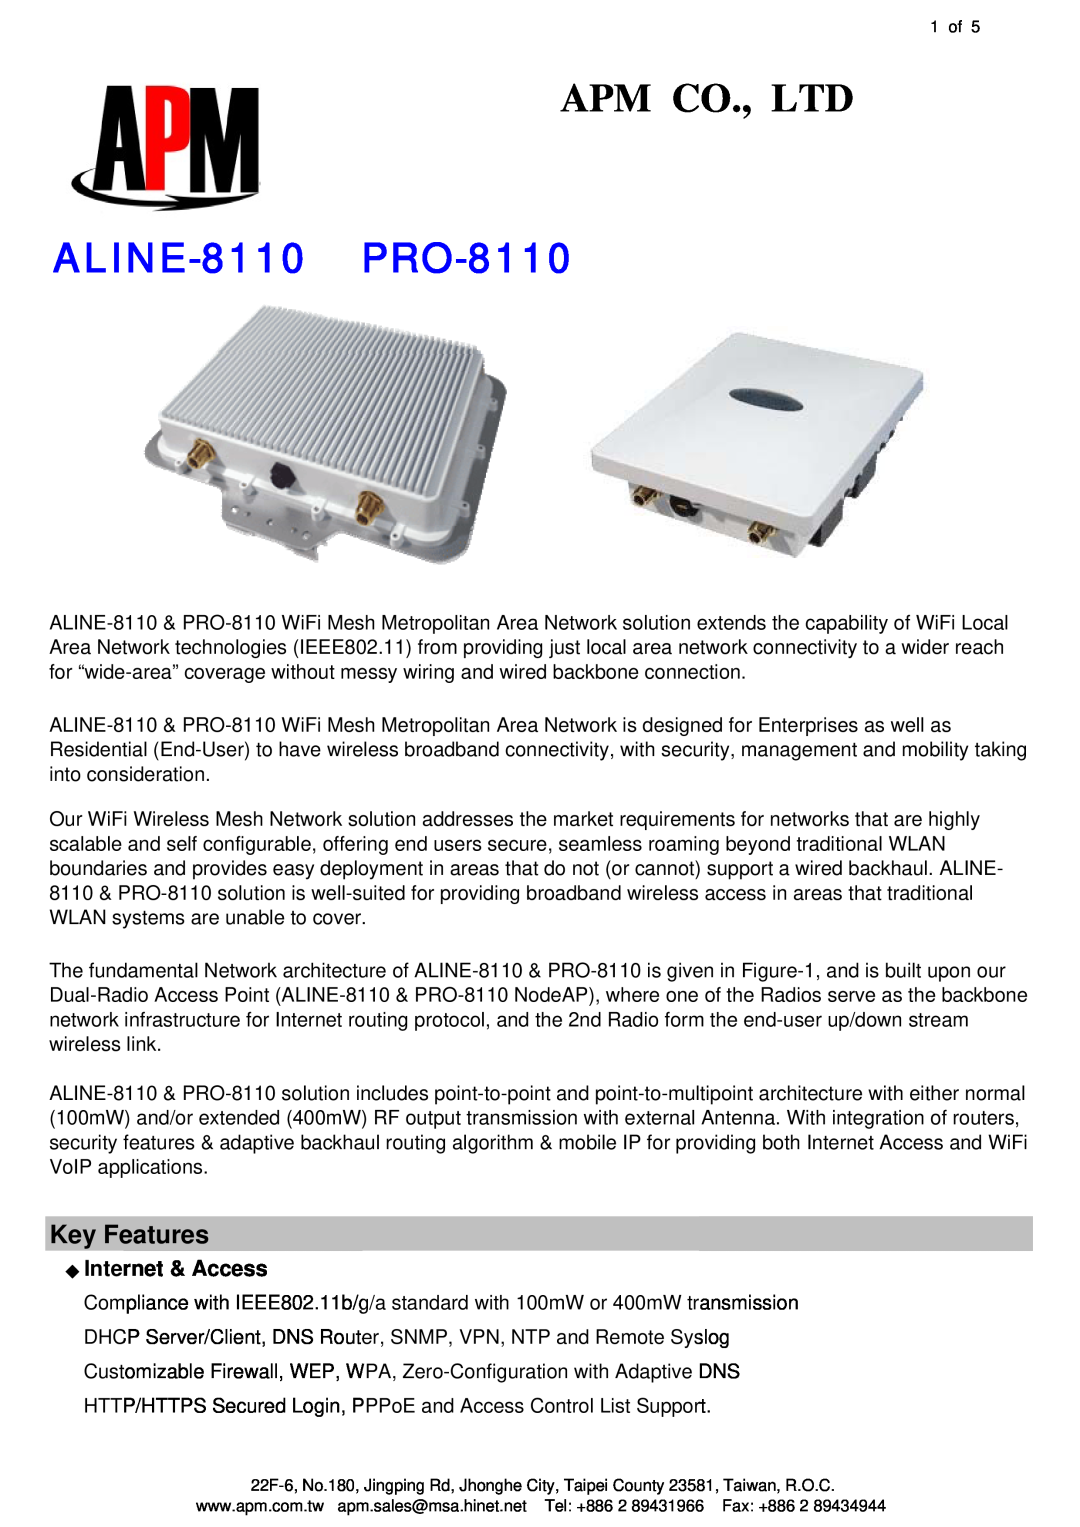 APM manual Key Features, Internet & Access, ALINE-8110 PRO-8110 